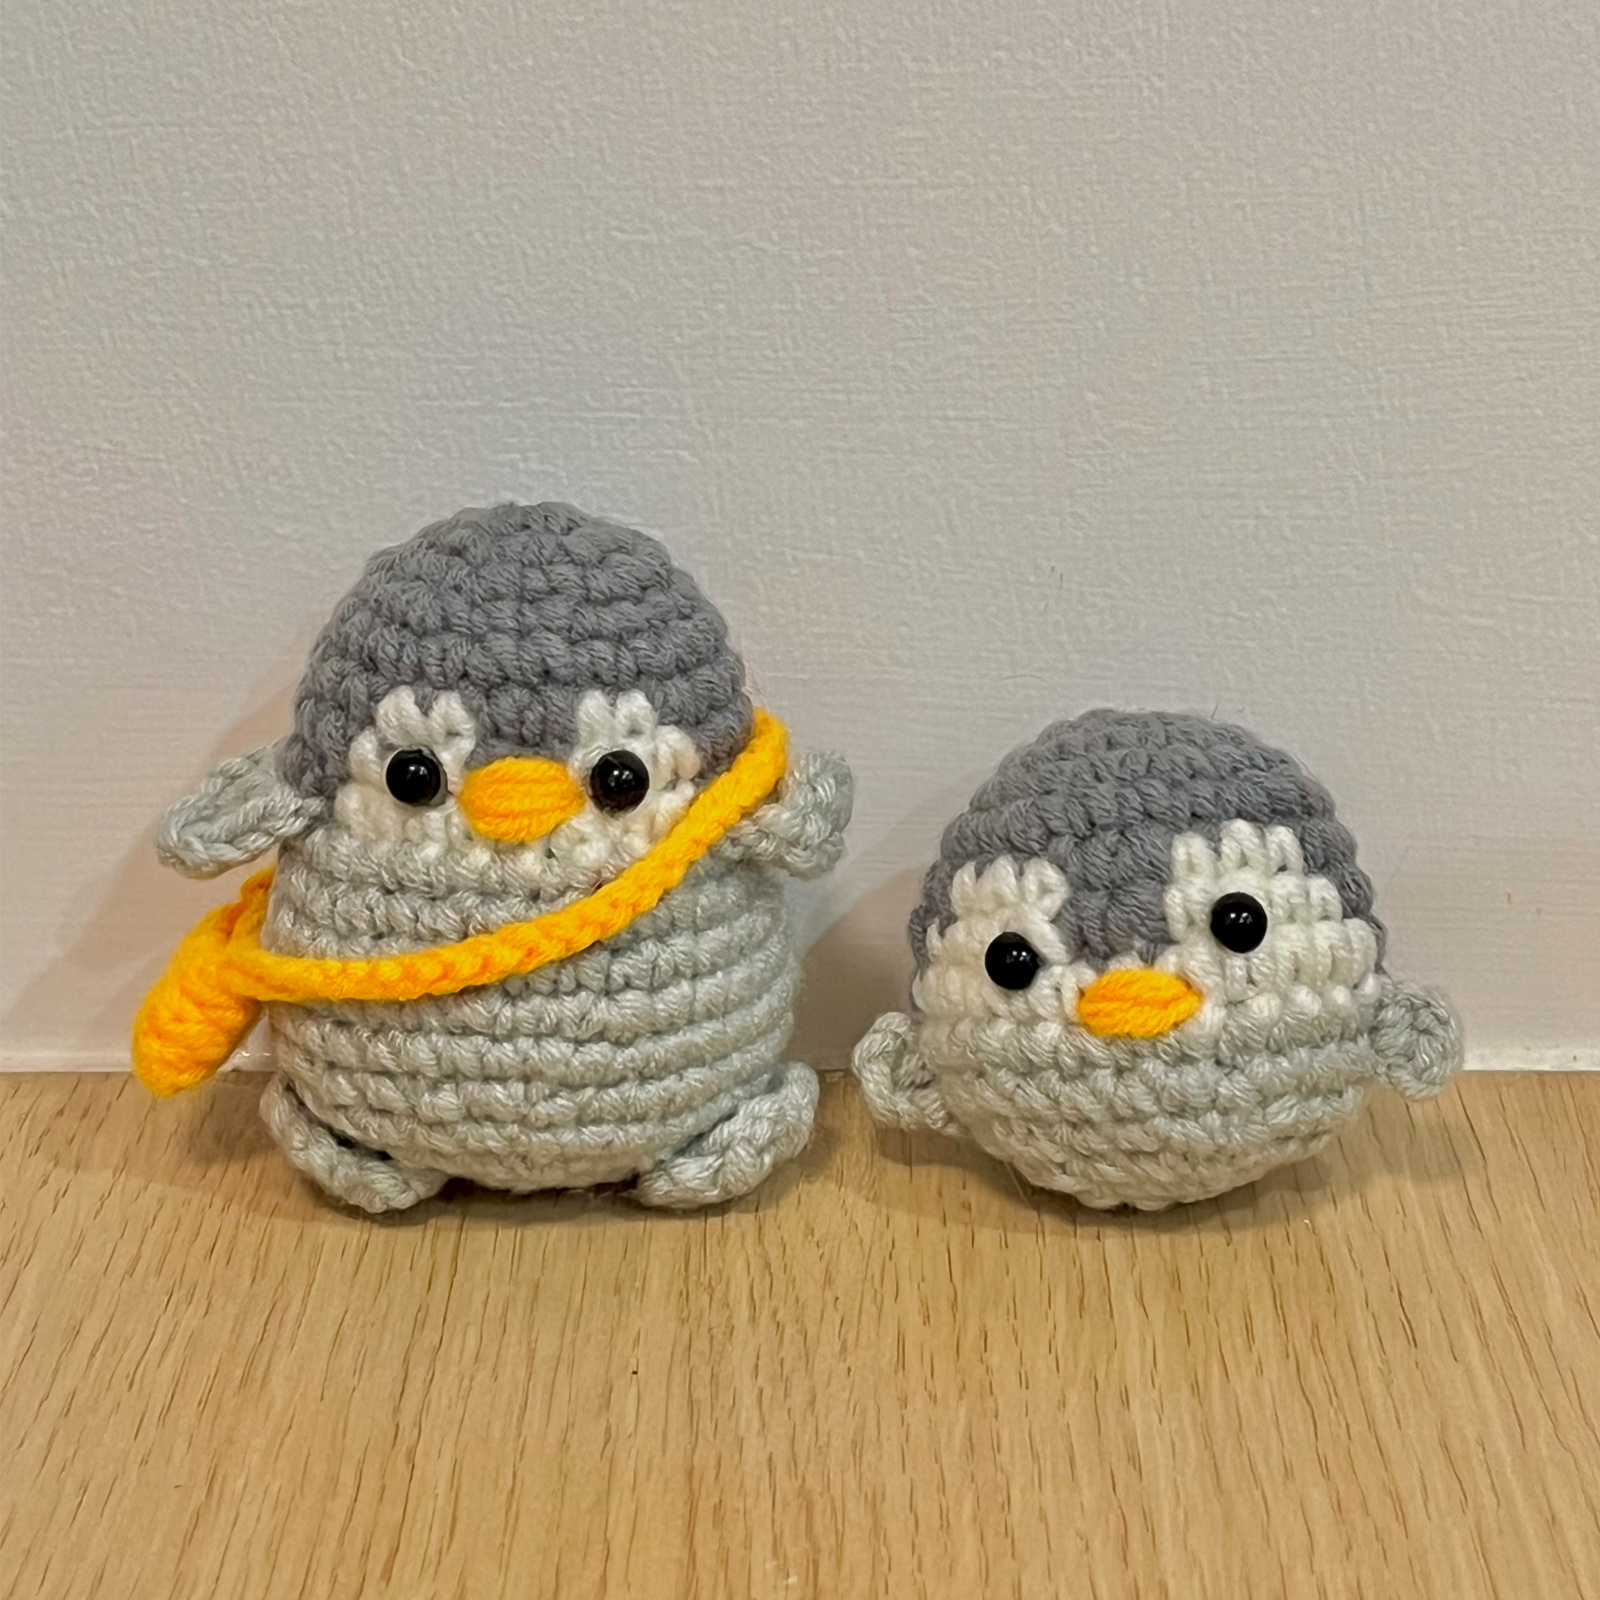  Alshurlife Crochet Kits for Beginners, Set of 2 Penguins  Knitting Kit Crochet Starter Kit for Beginners Adults with Yarn, Hook,  Needle, Step-by-Step Video Tutorials